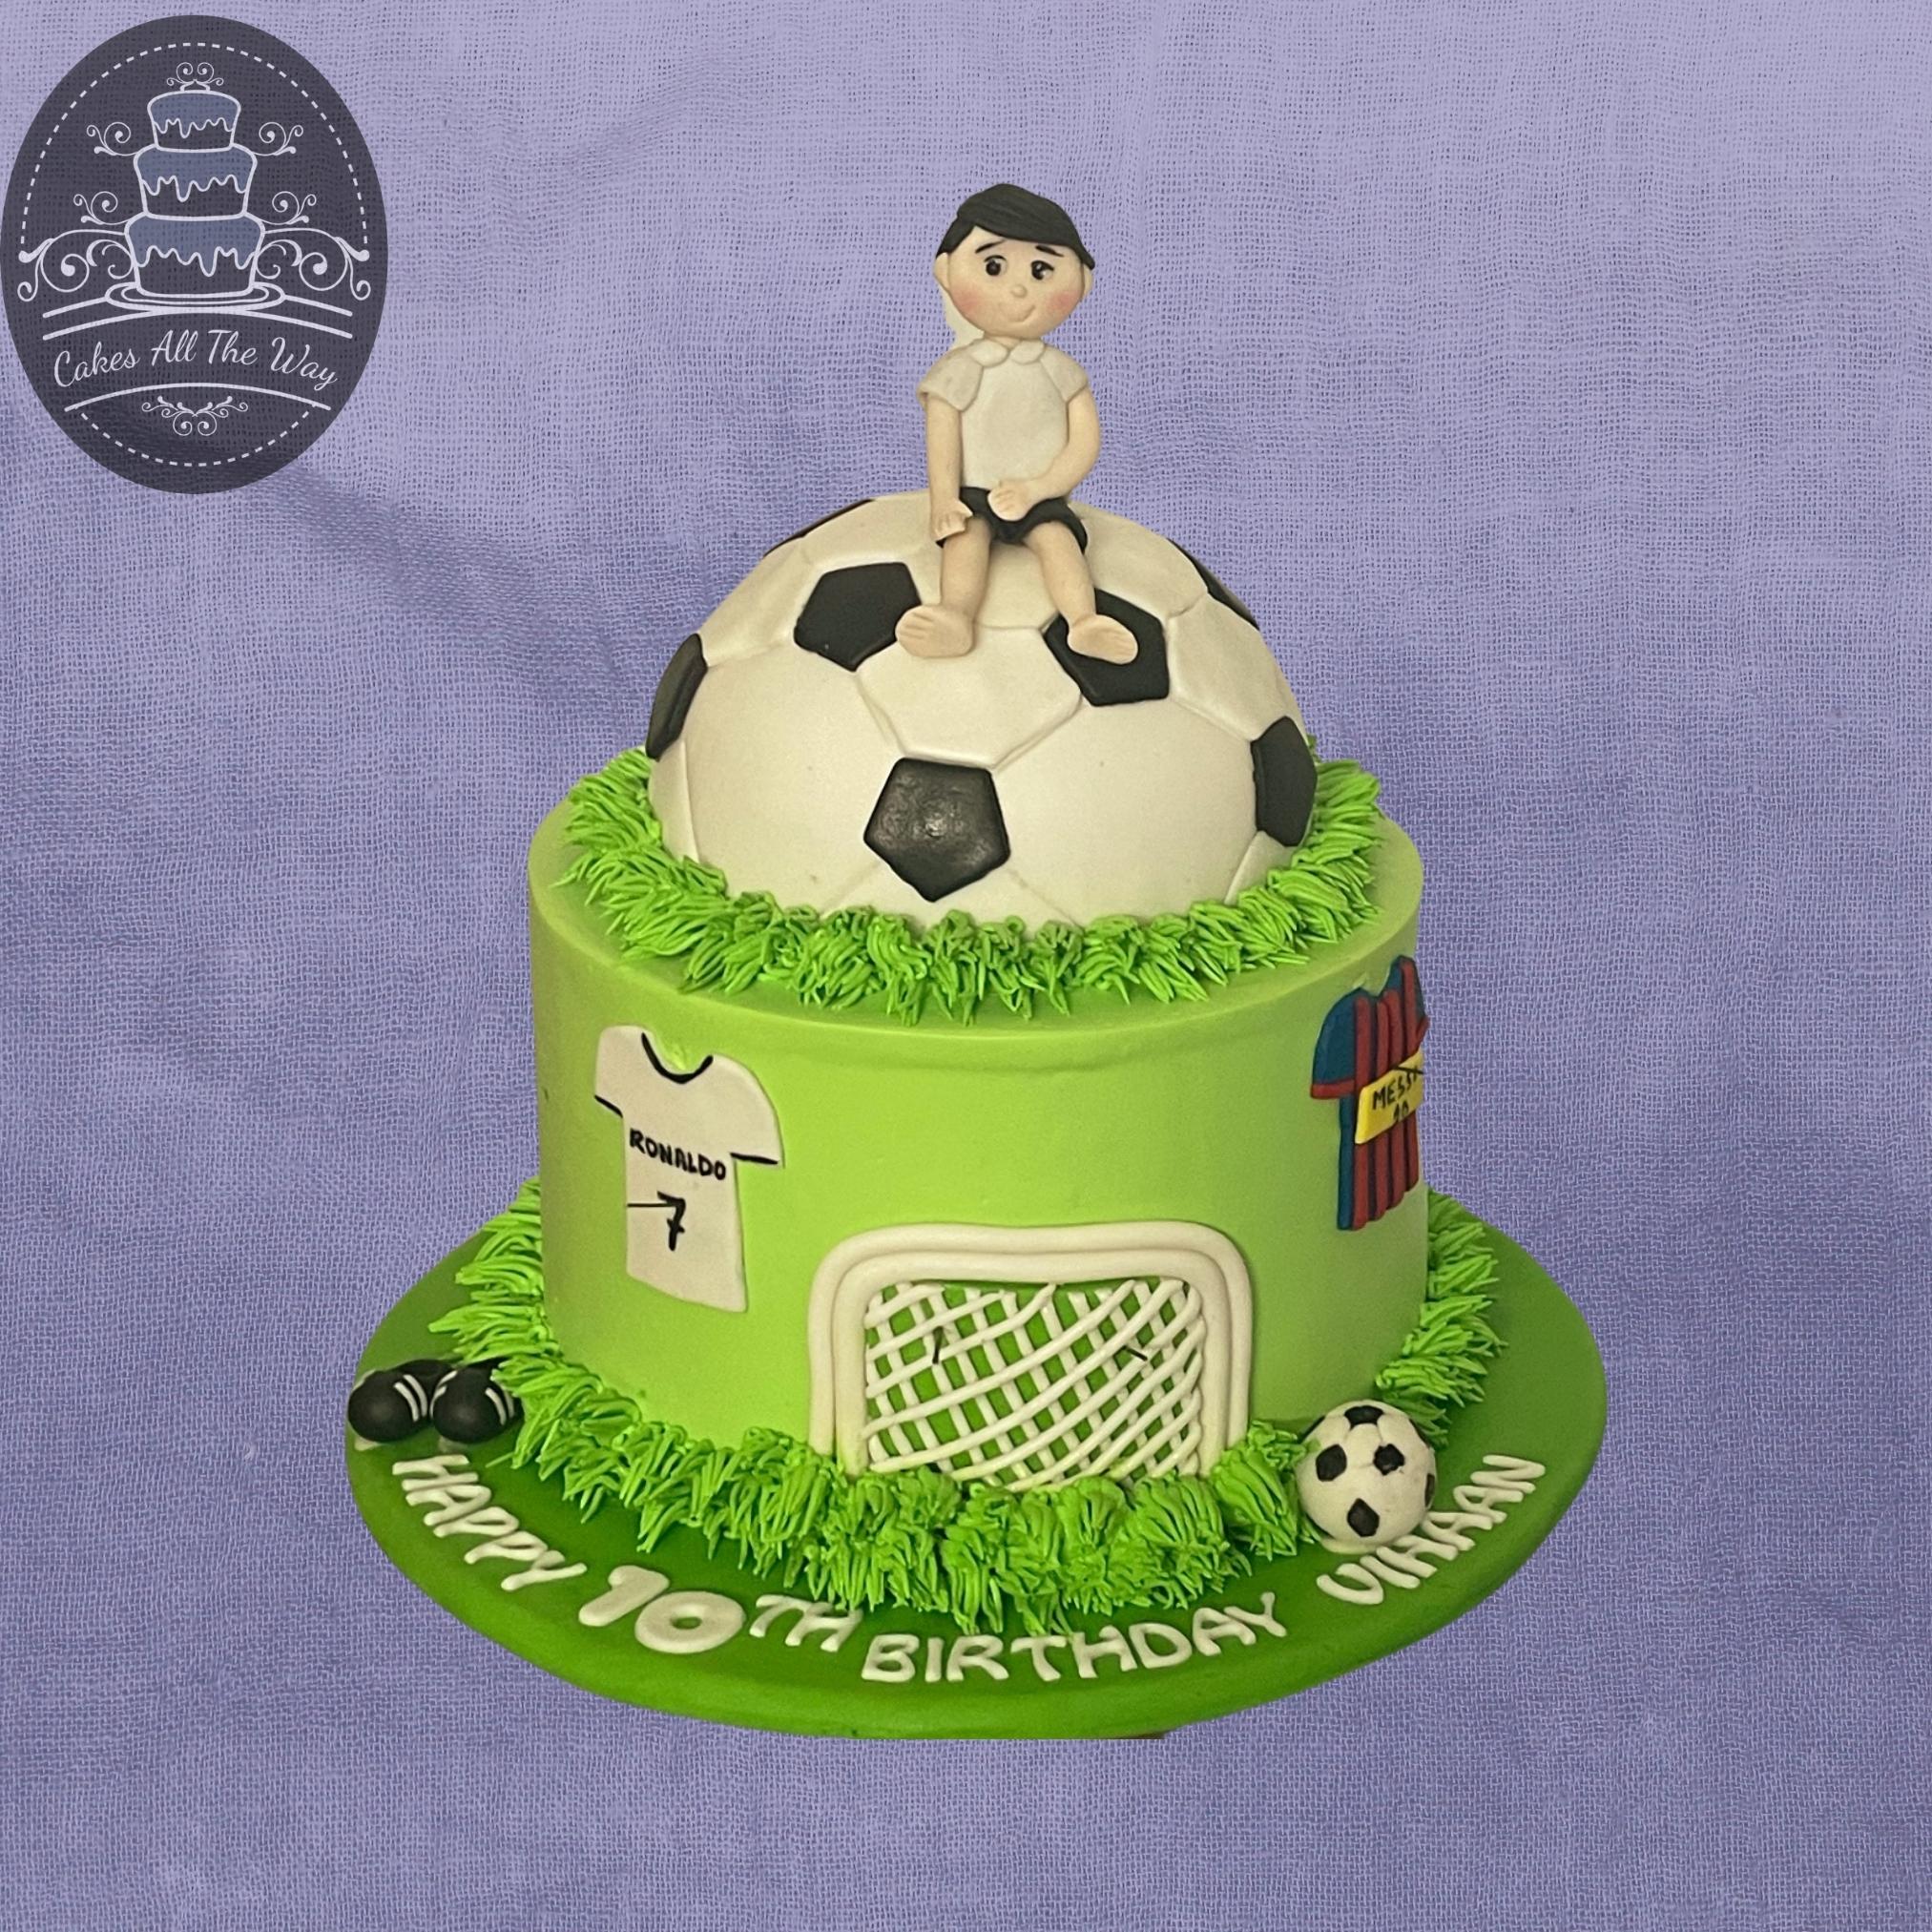 Football Theme Cake | bakehoney.com